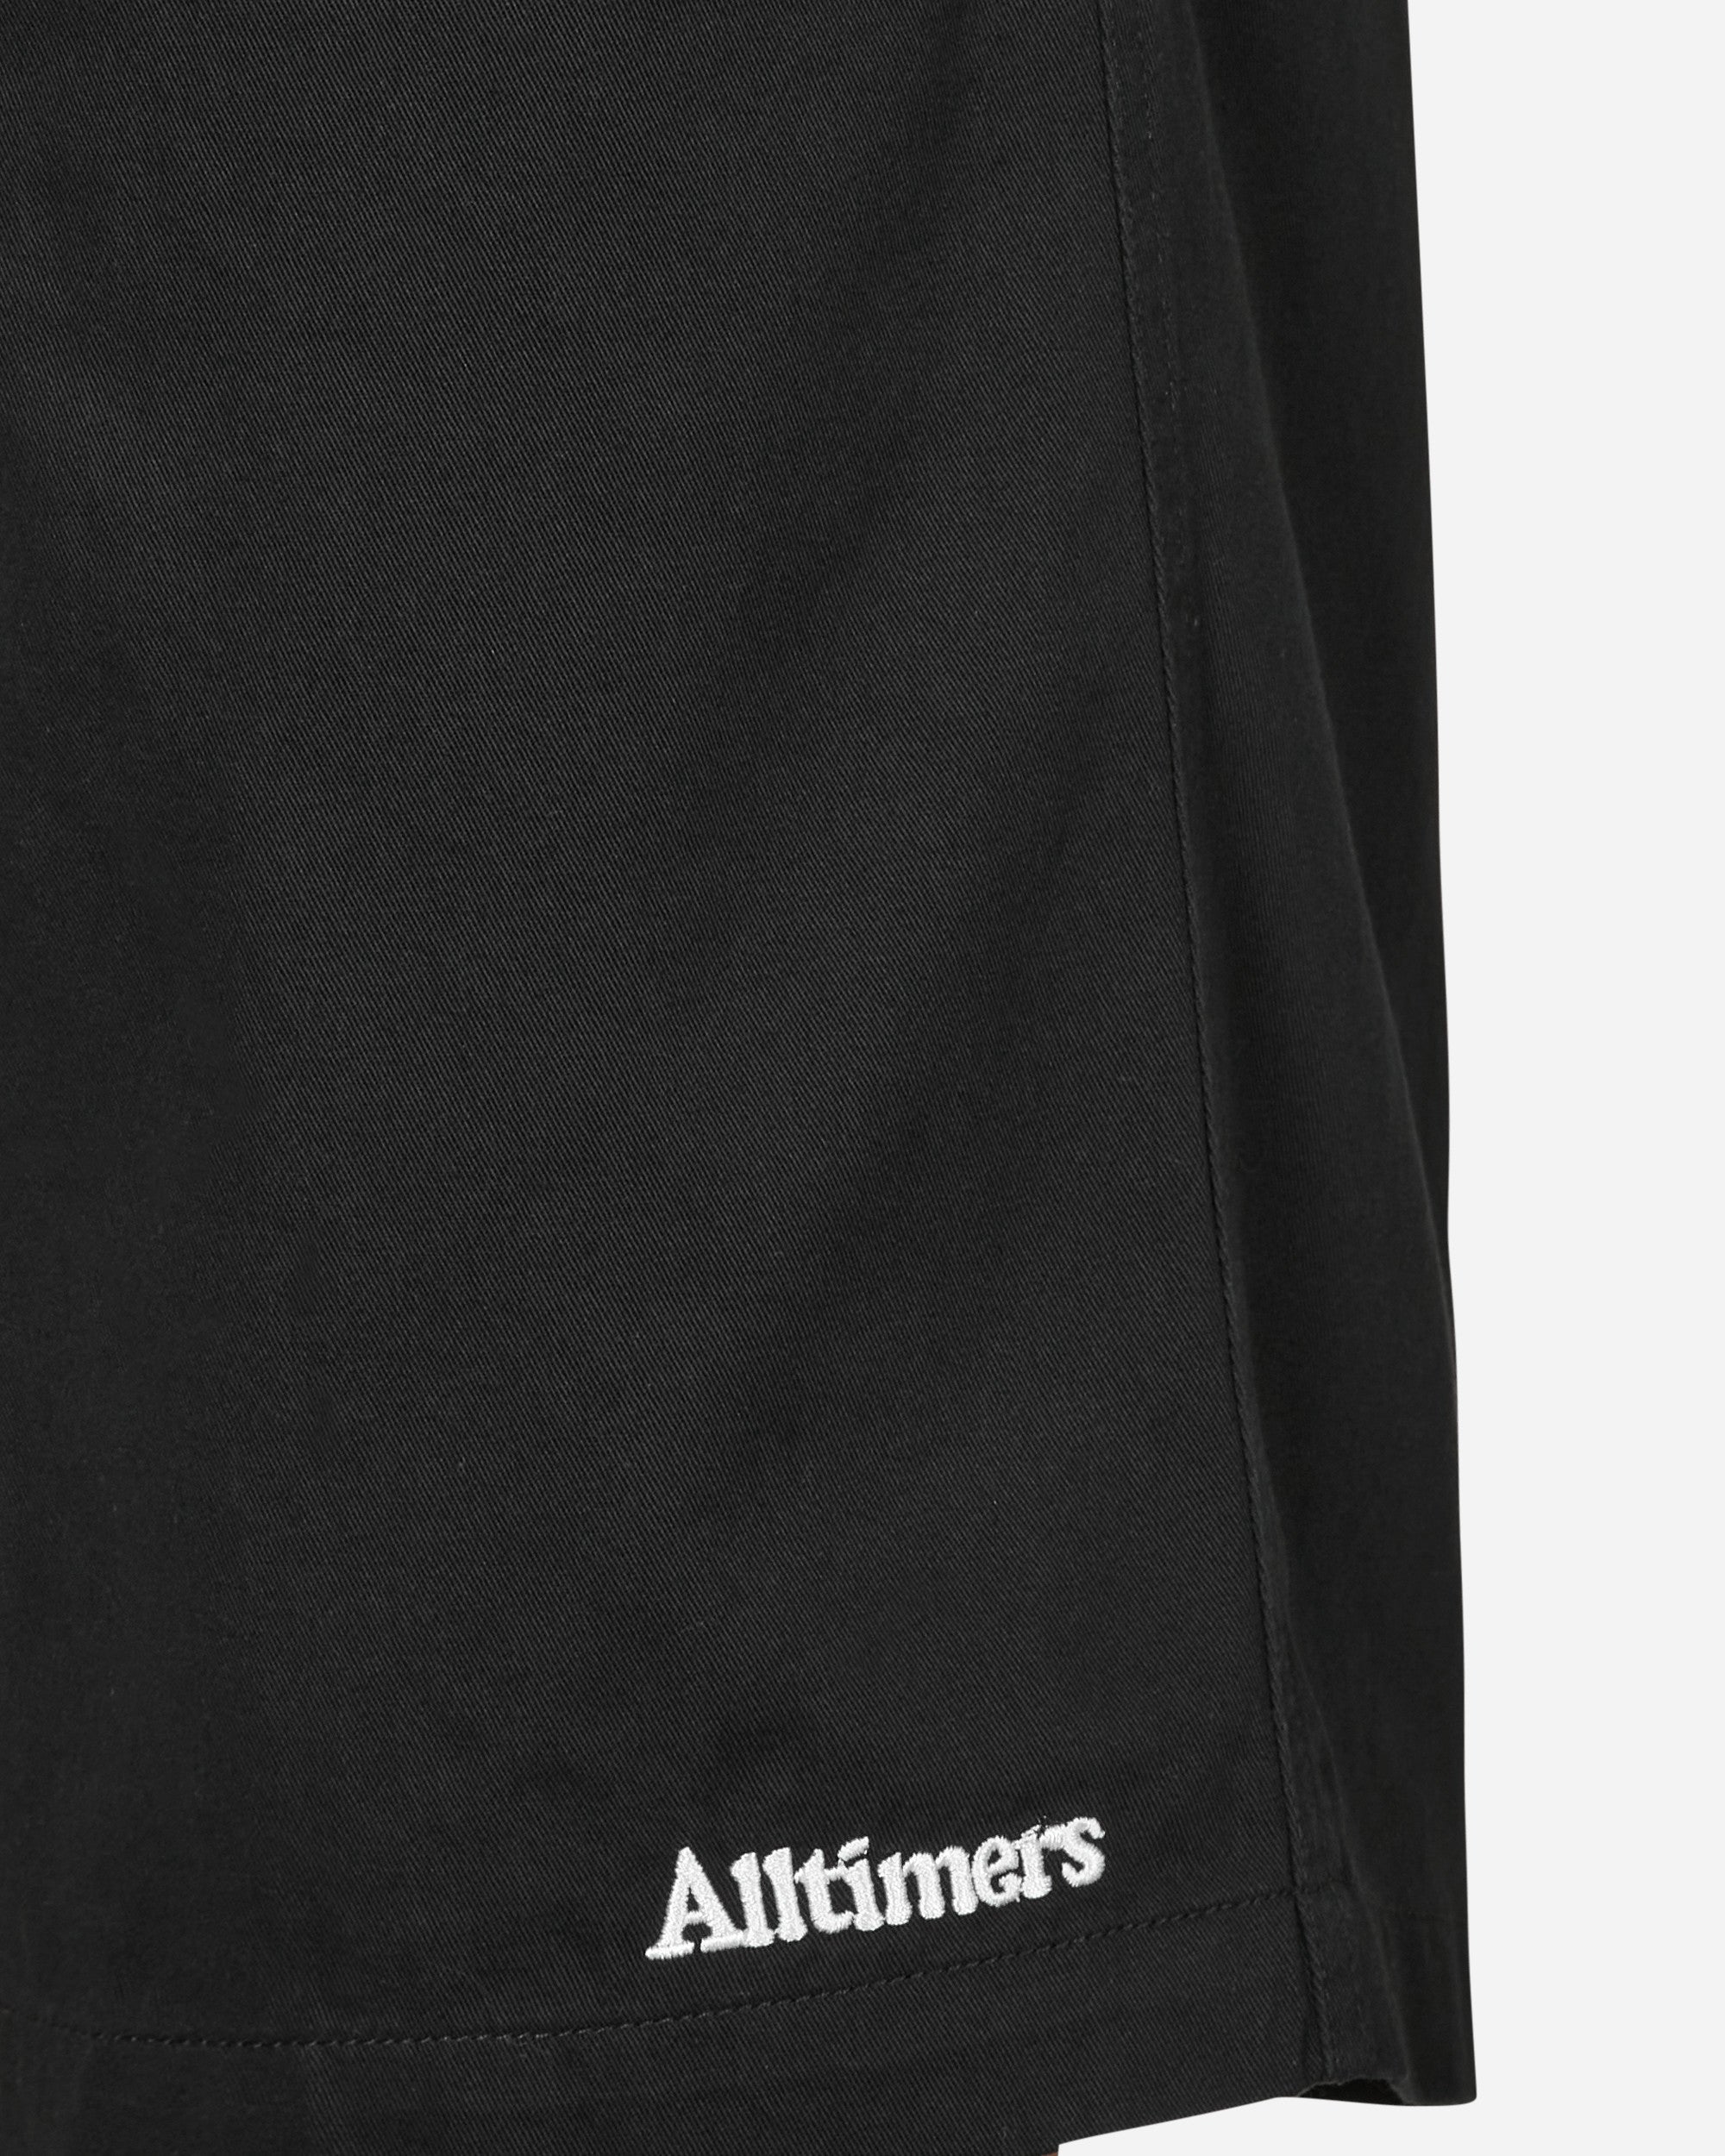 Alltimers Yacht Rental Shorts Black Shorts Short PN1746 001